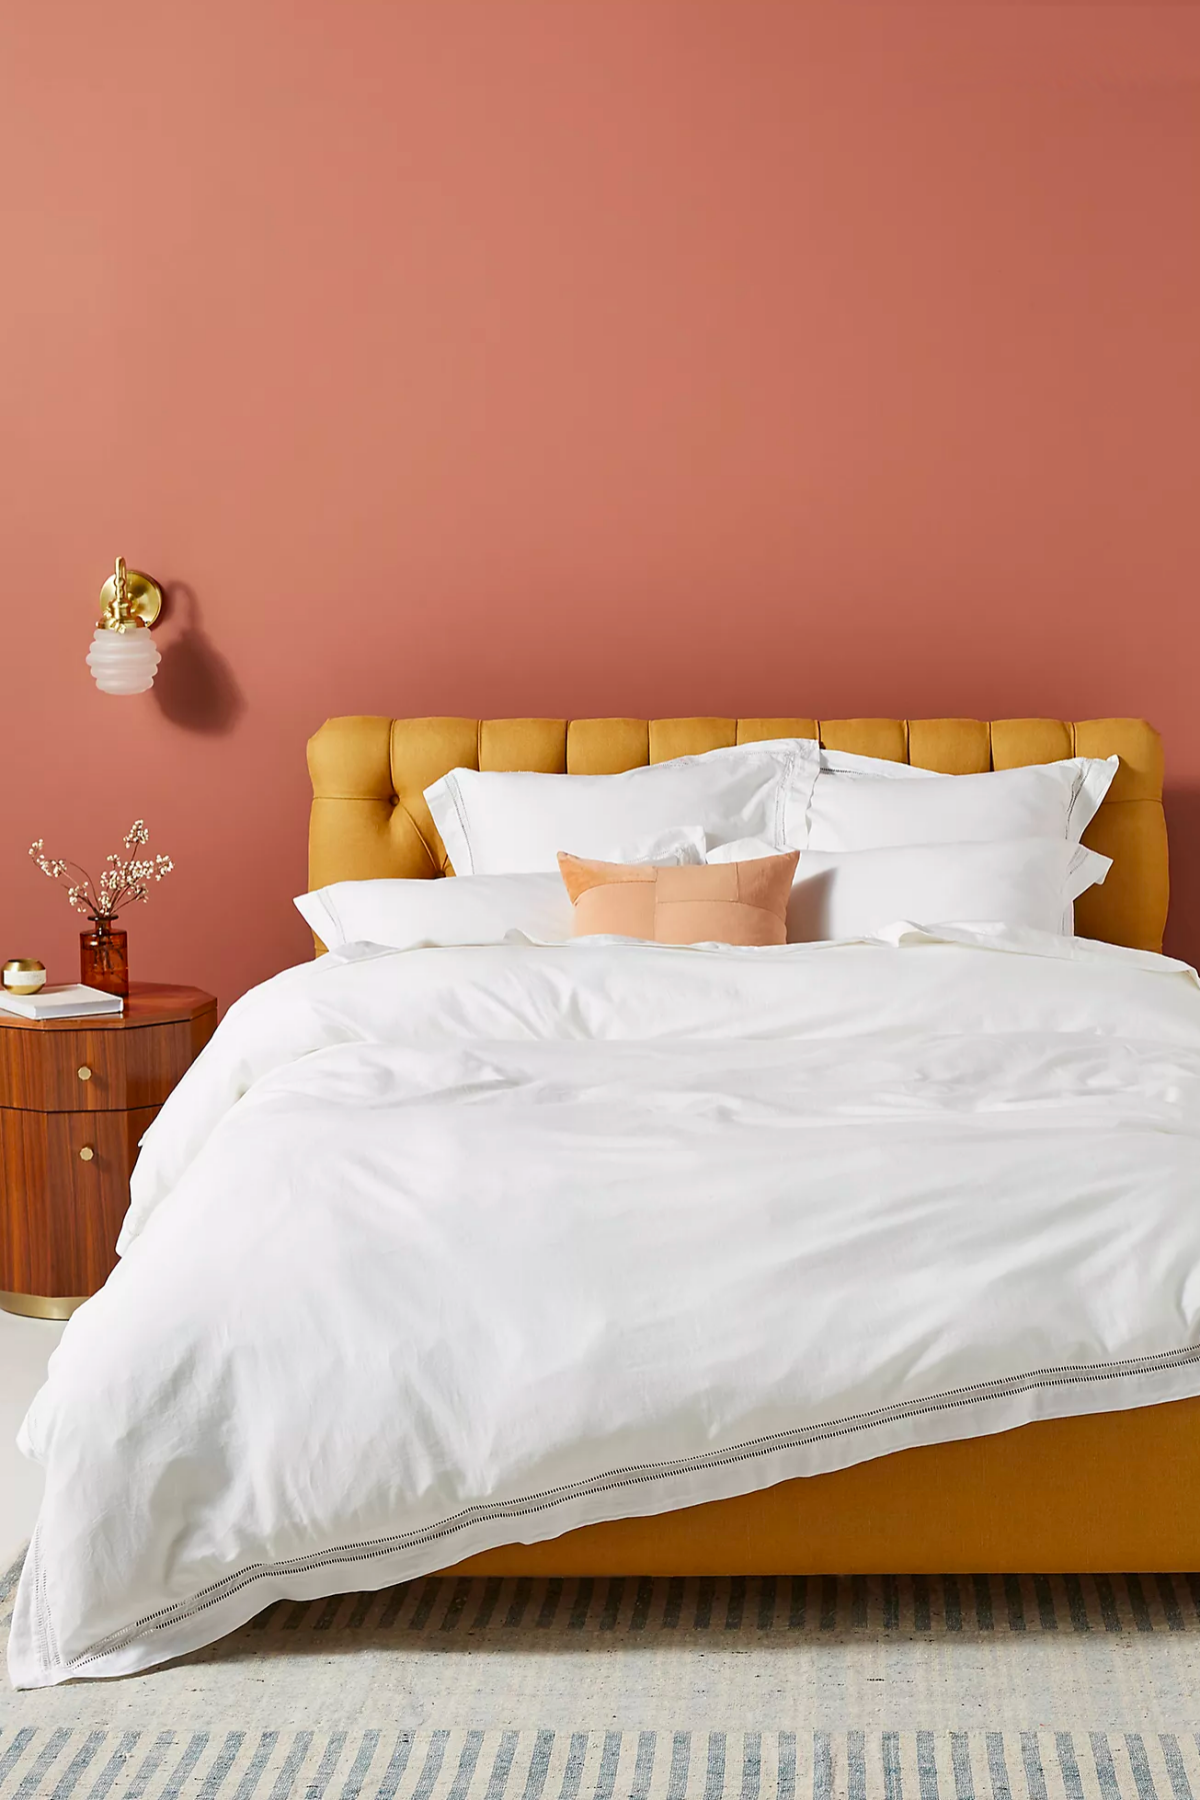 terracotta best colors to paint bedroom walls